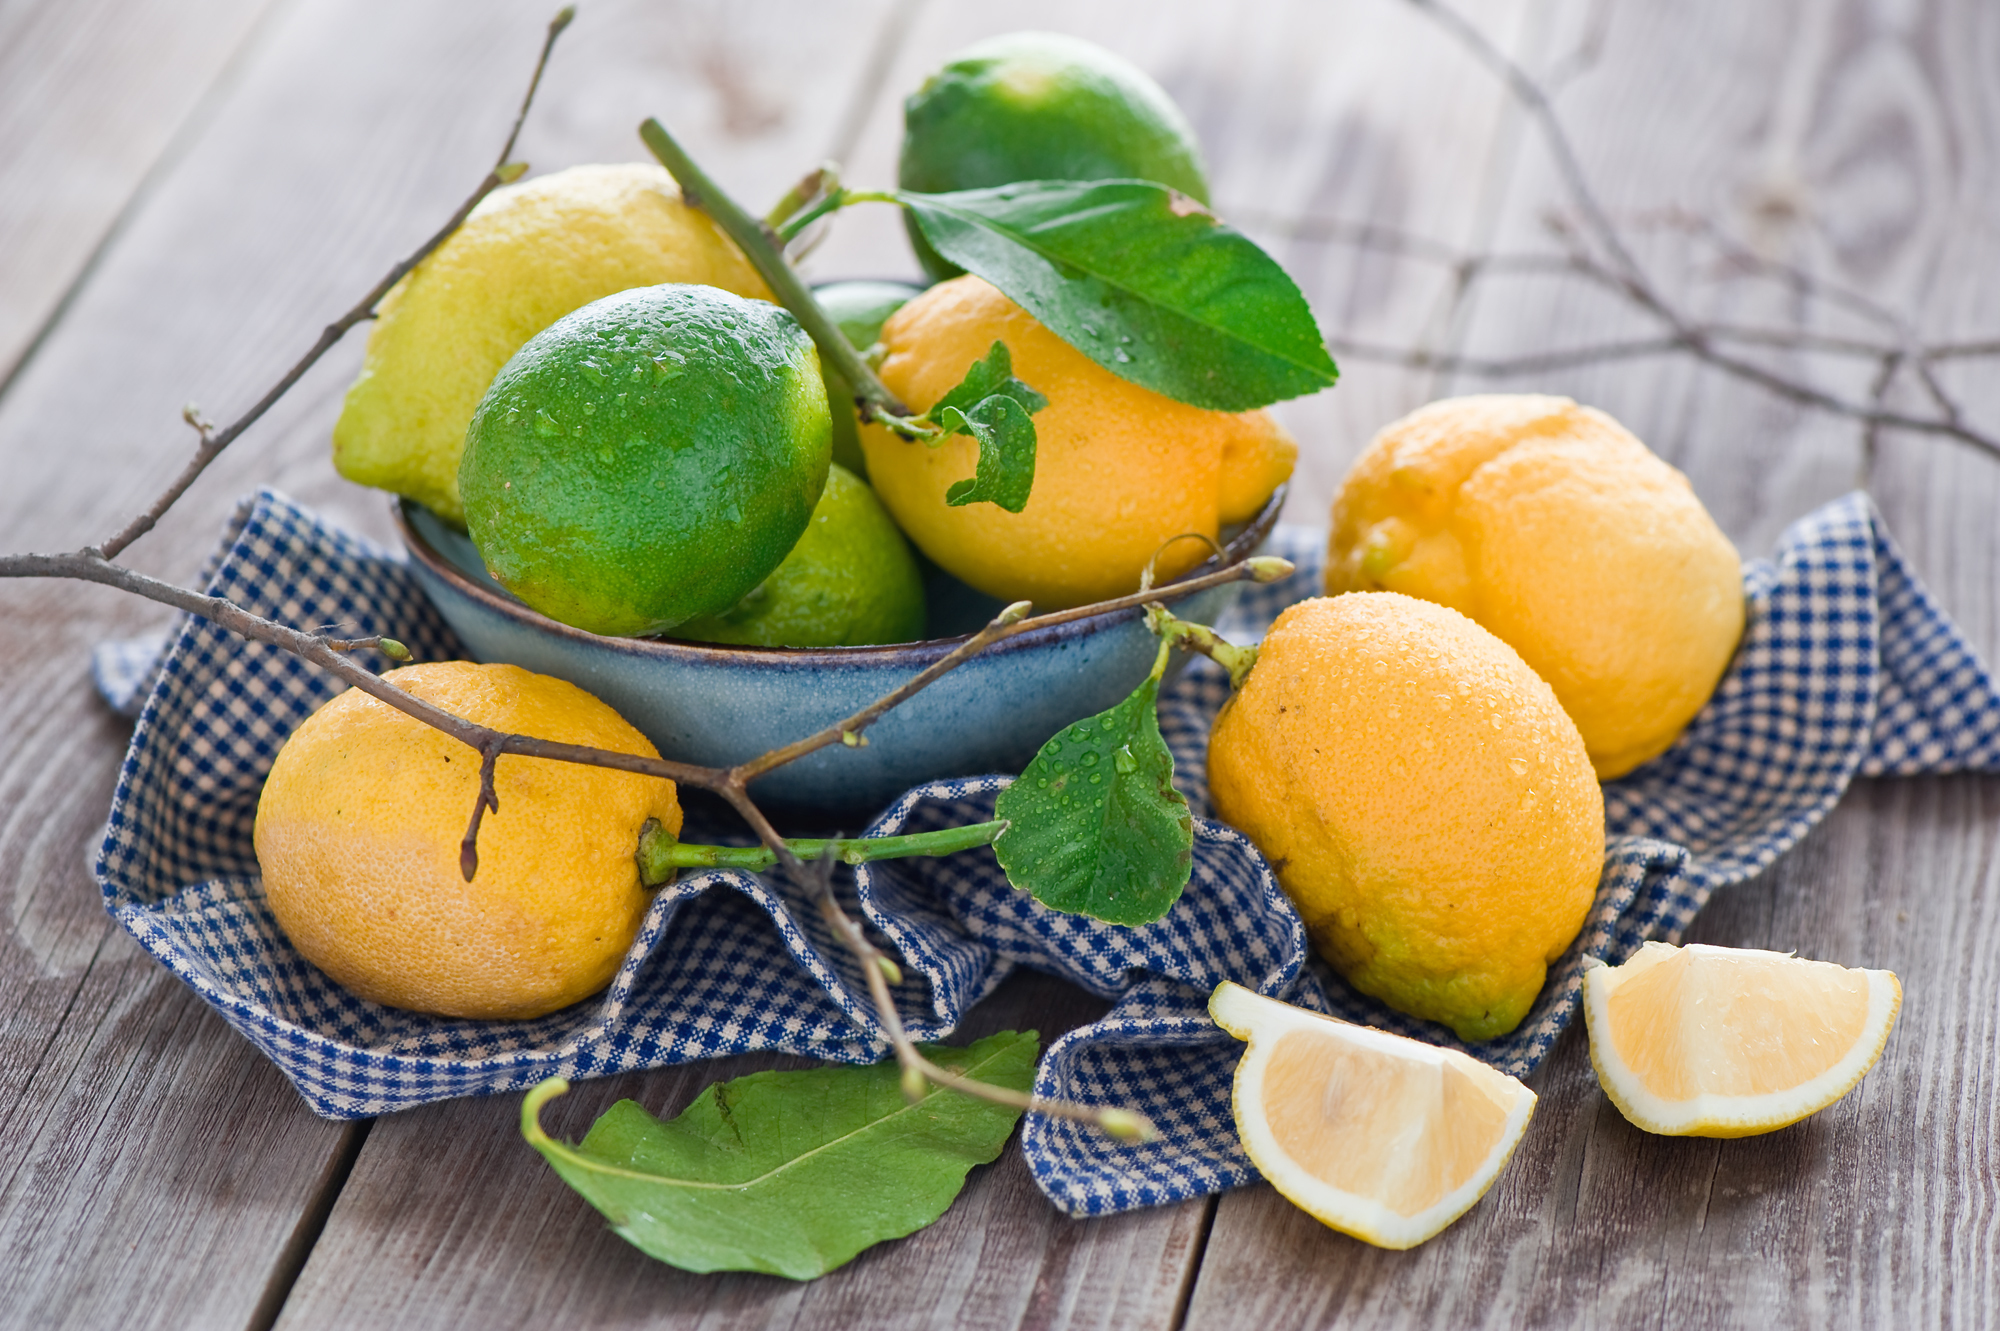 еда лимон мандарин вода лайм food lemon Mandarin water lime загрузить